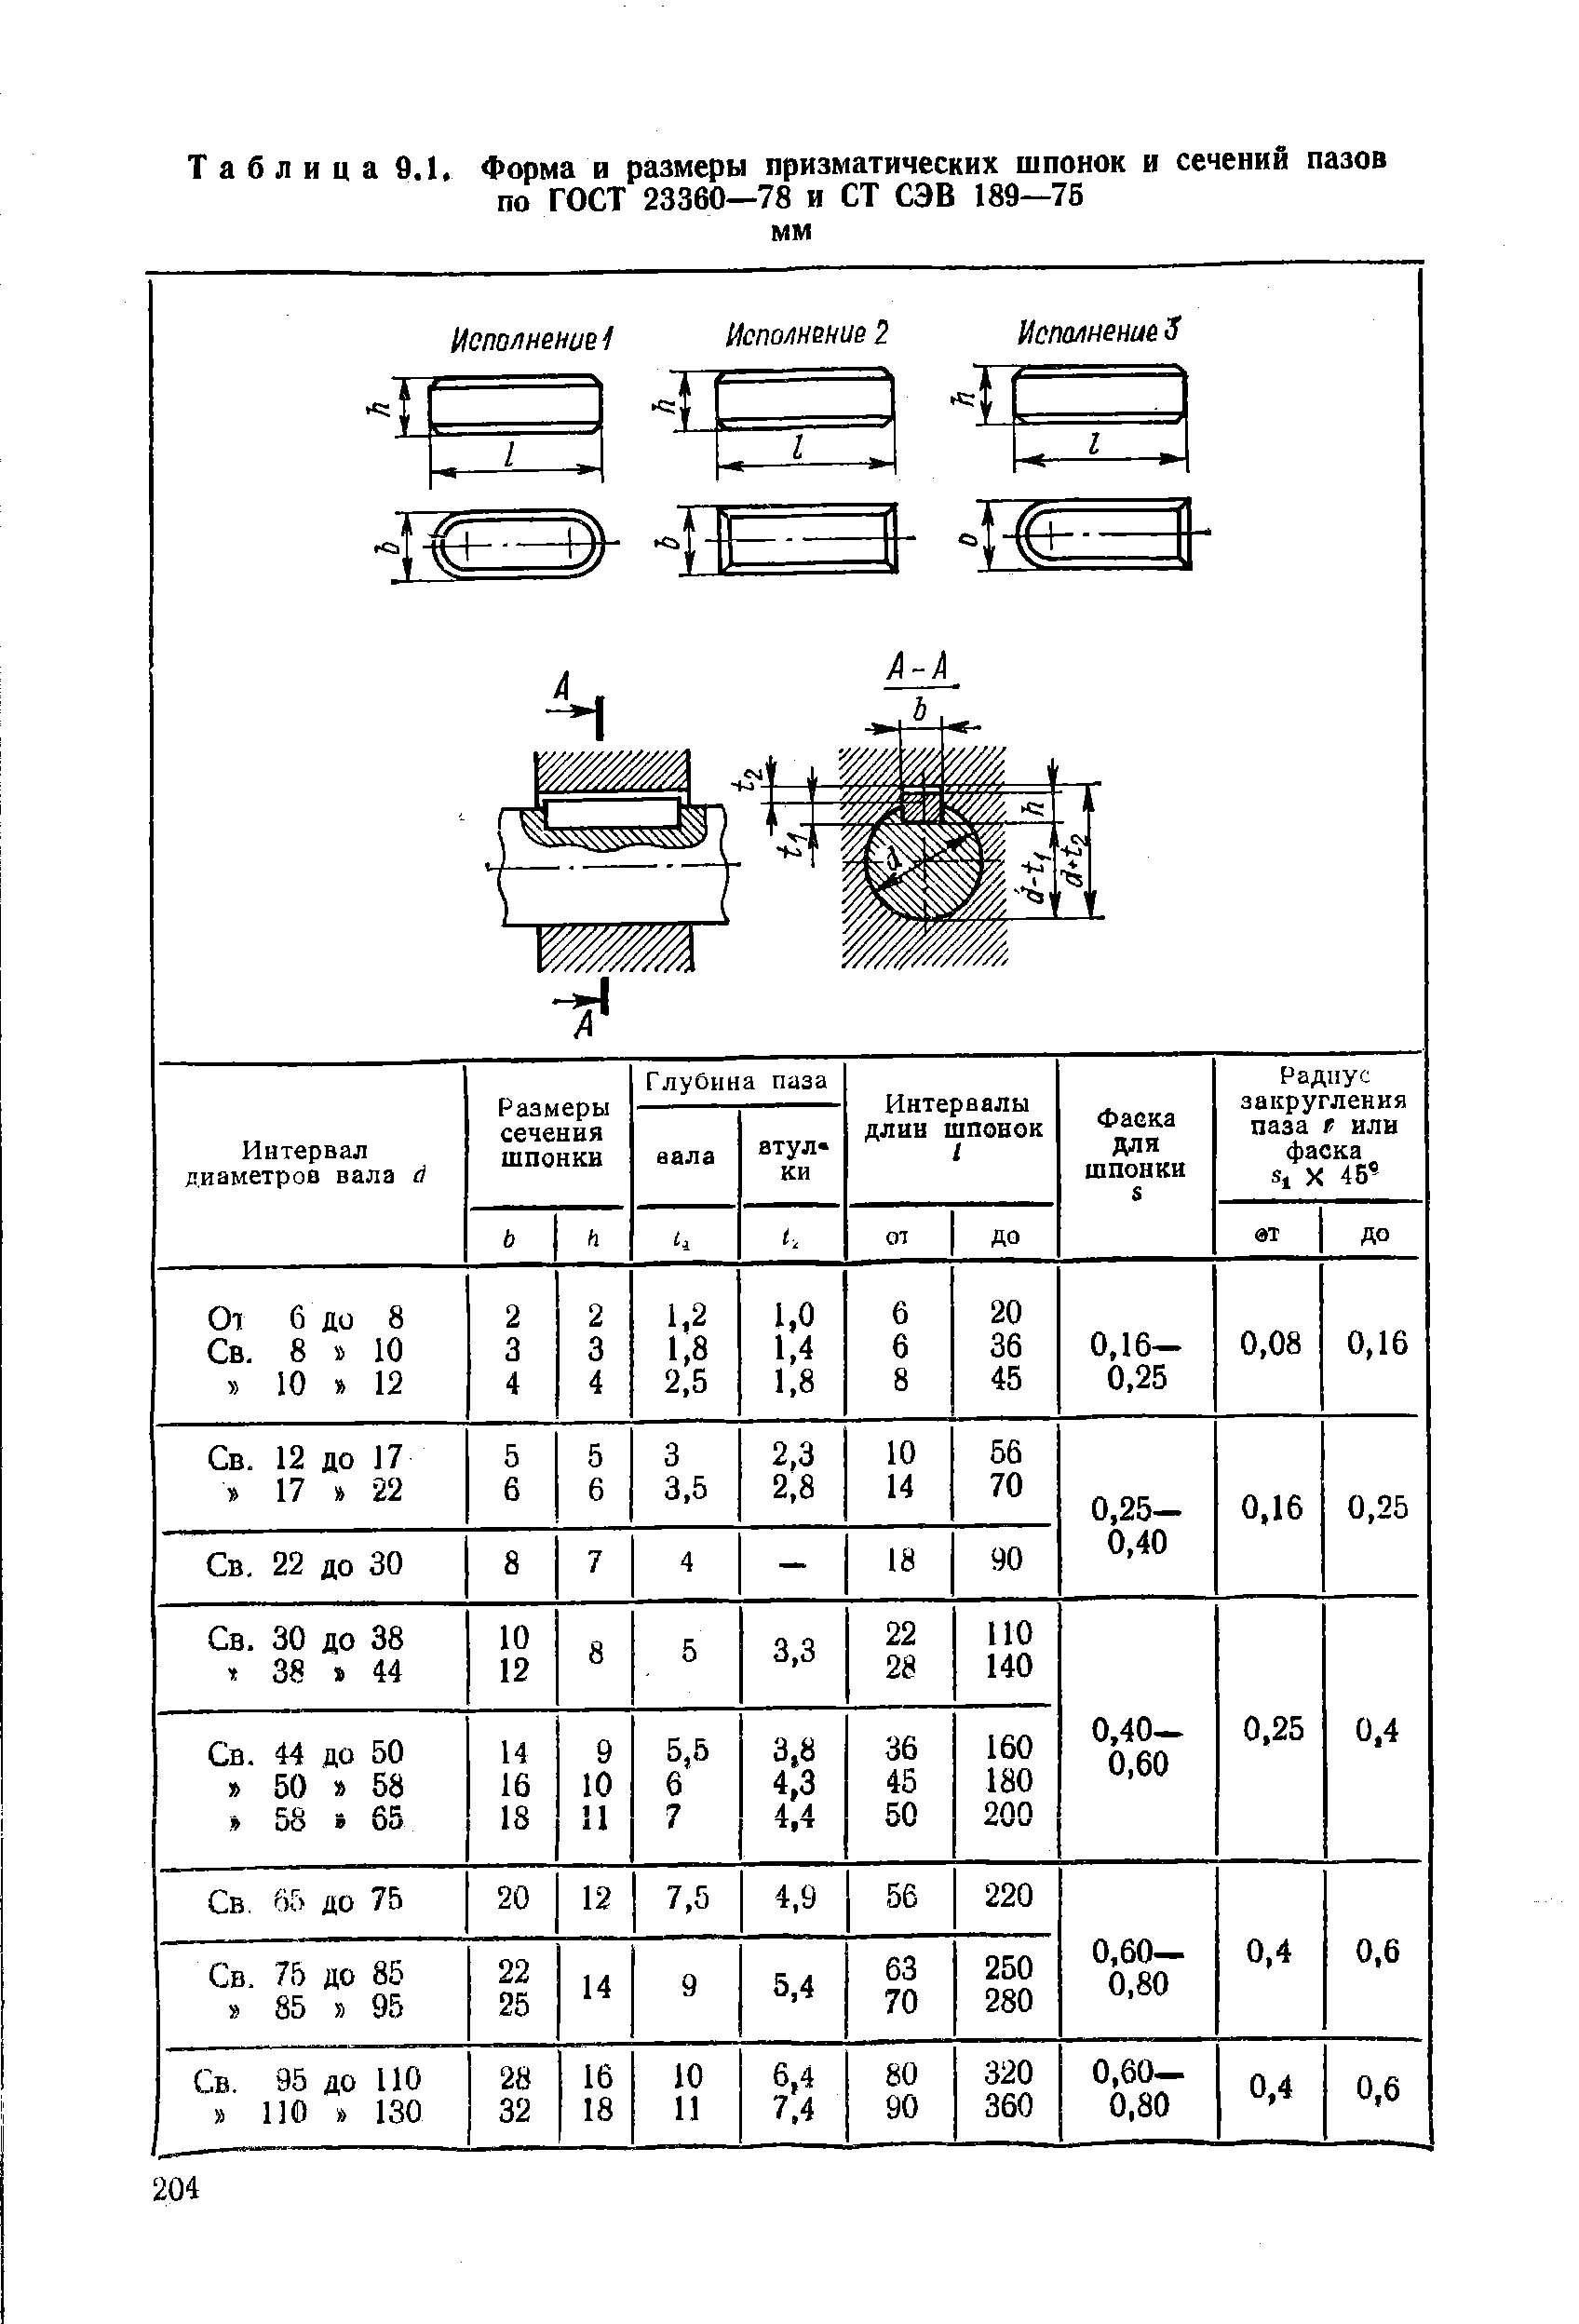 Таблица 9.1. Форма и <a href="/info/119057">размеры призматических шпонок</a> и сечений пазов по ГОСТ 23360—78 и СТ СЭВ 189—76 мм
